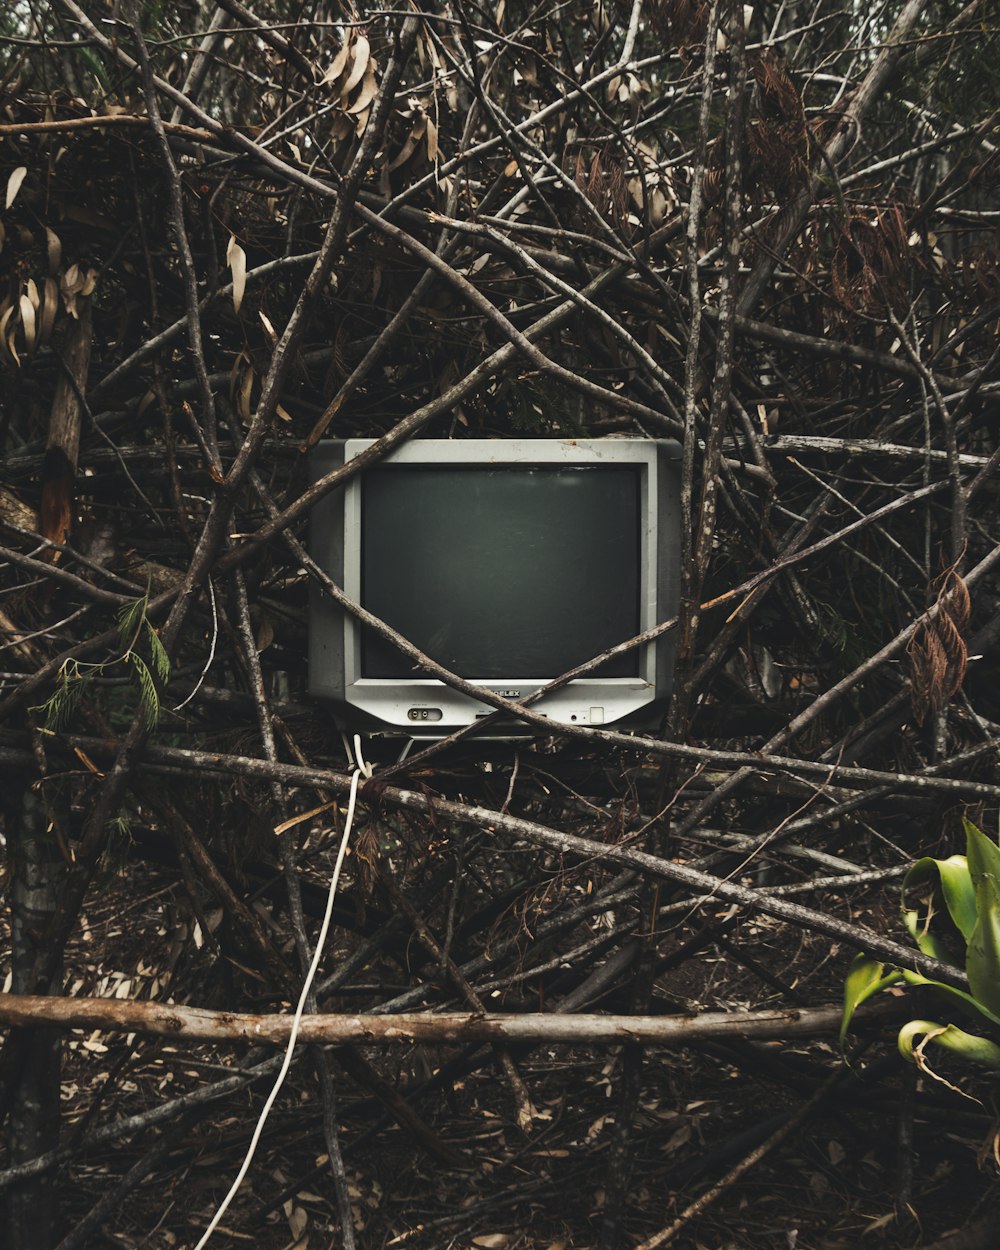 Televisor CRT de pantalla ancha gris rodeado de plantas marrones